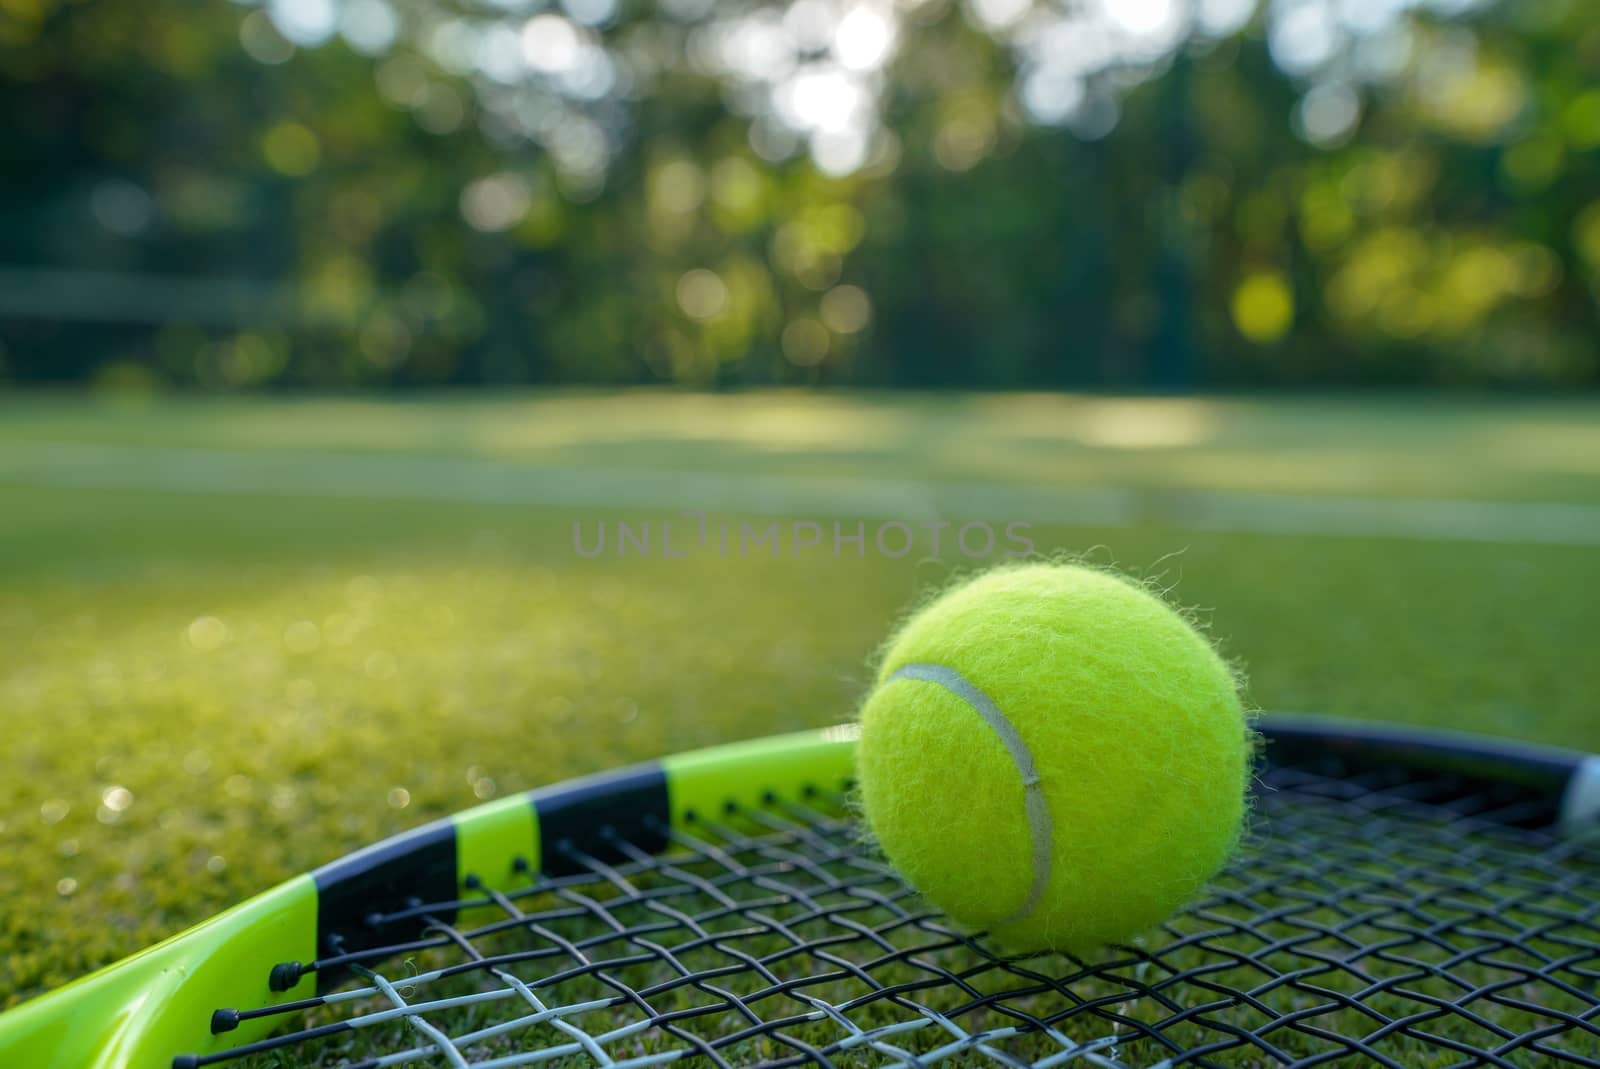 Tennis ball and racket in the artificial grass tennis court.